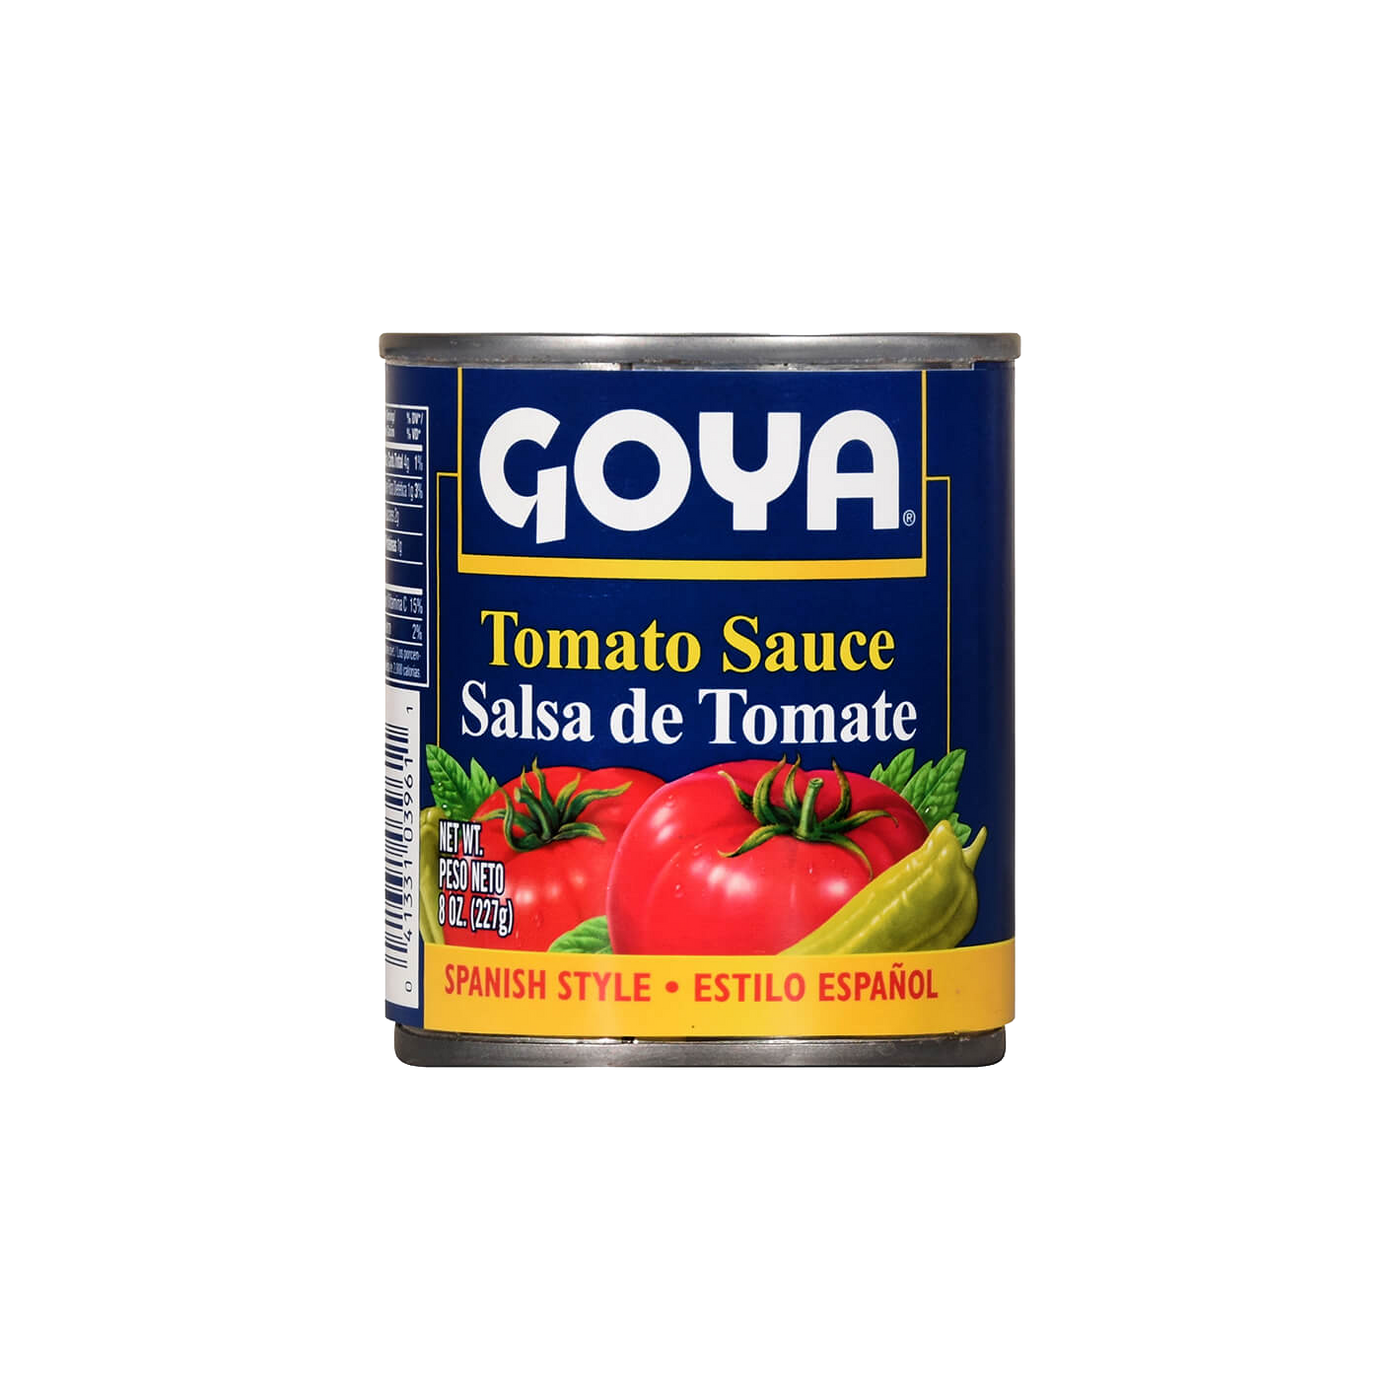   Goya Tomato Sauce Spanish Style